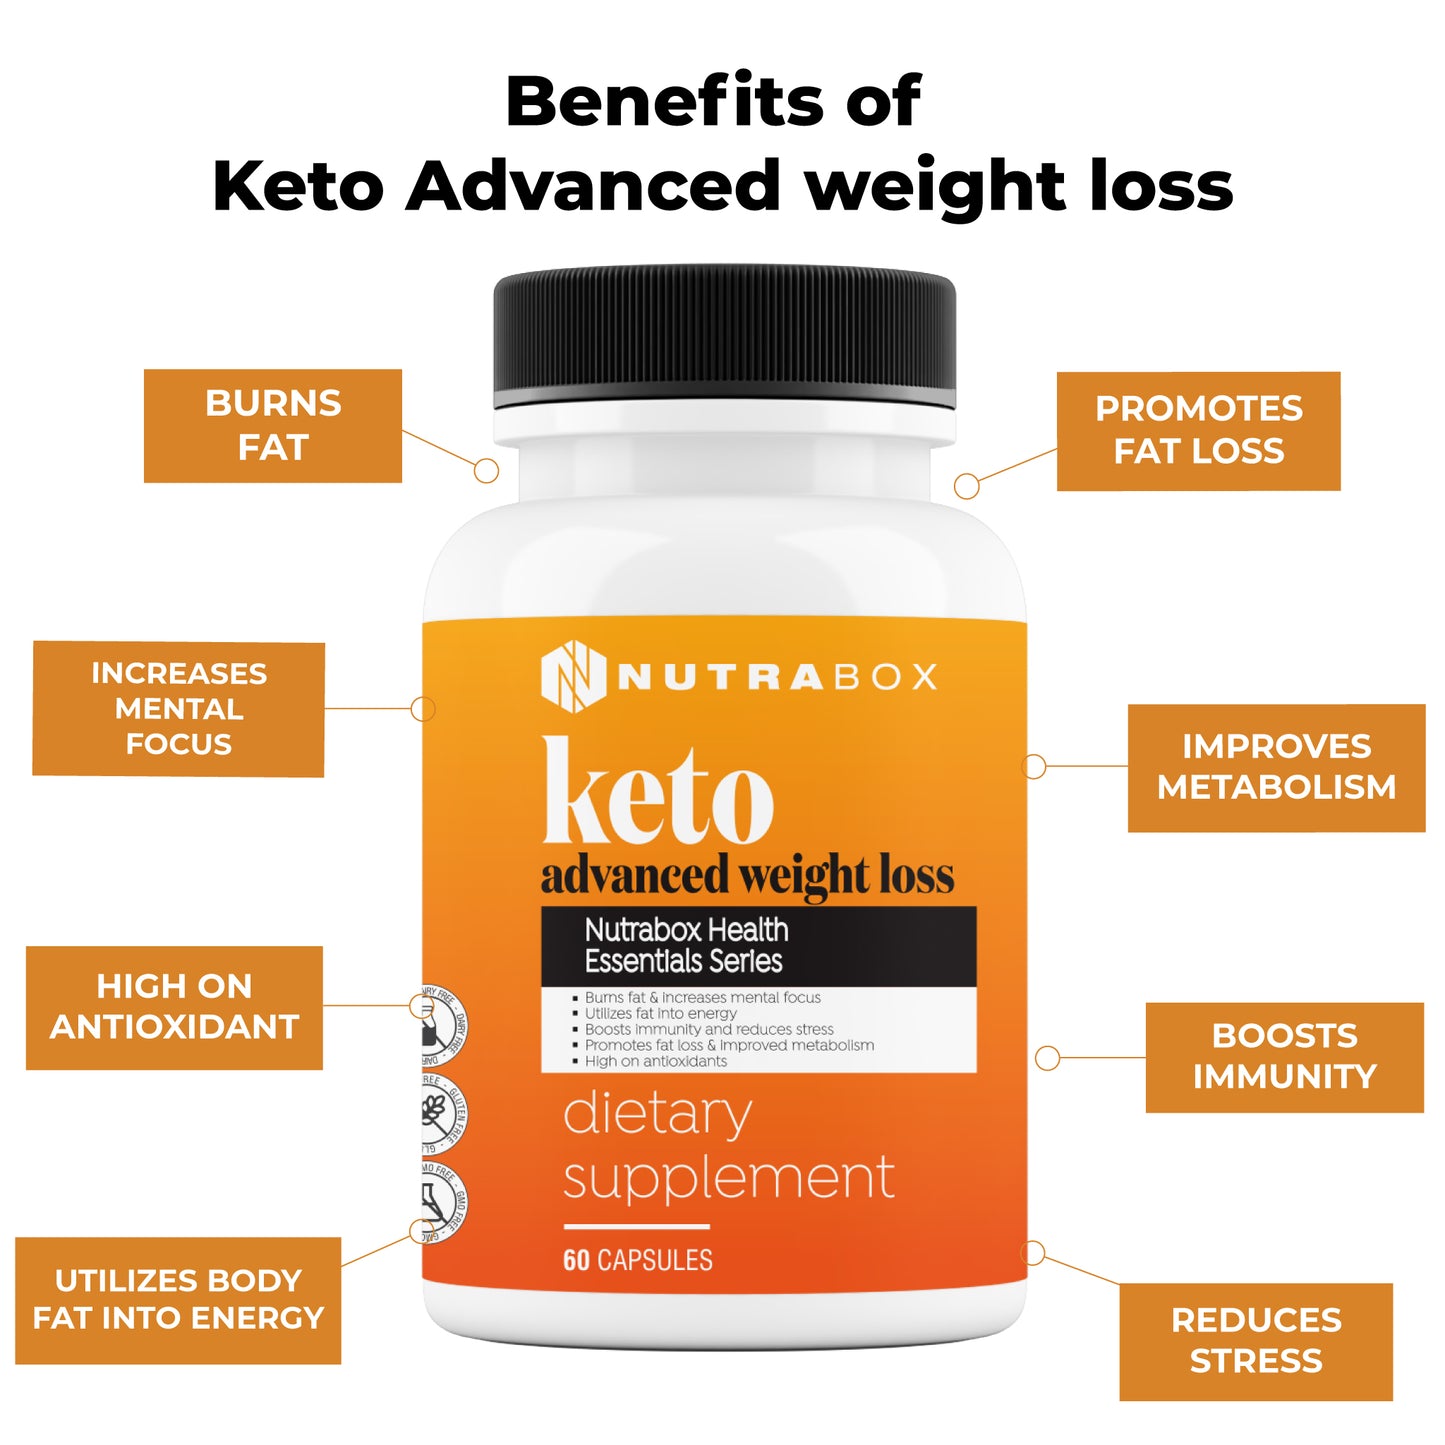 Nutrabox Keto Advanced Weight Loss (60 capsules)